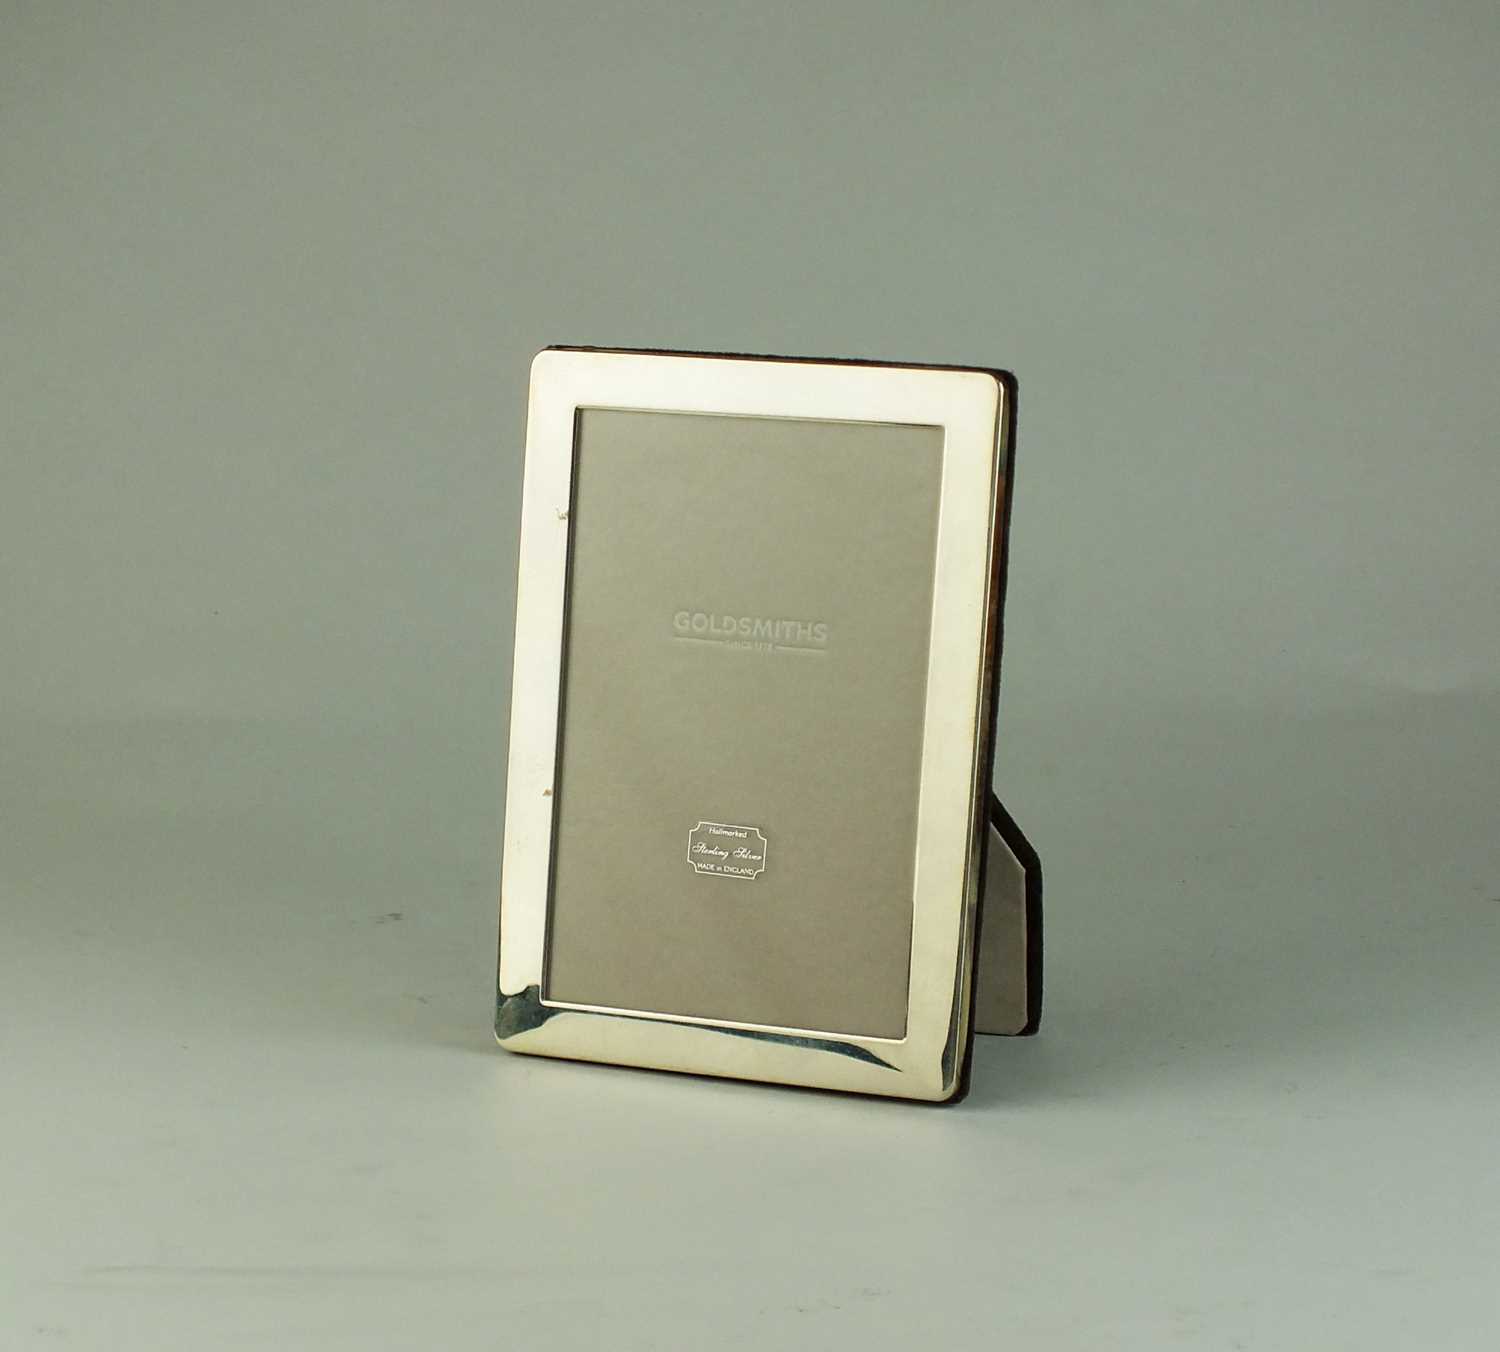 Lot 2 - A Goldsmiths silver mounted rectangular frame